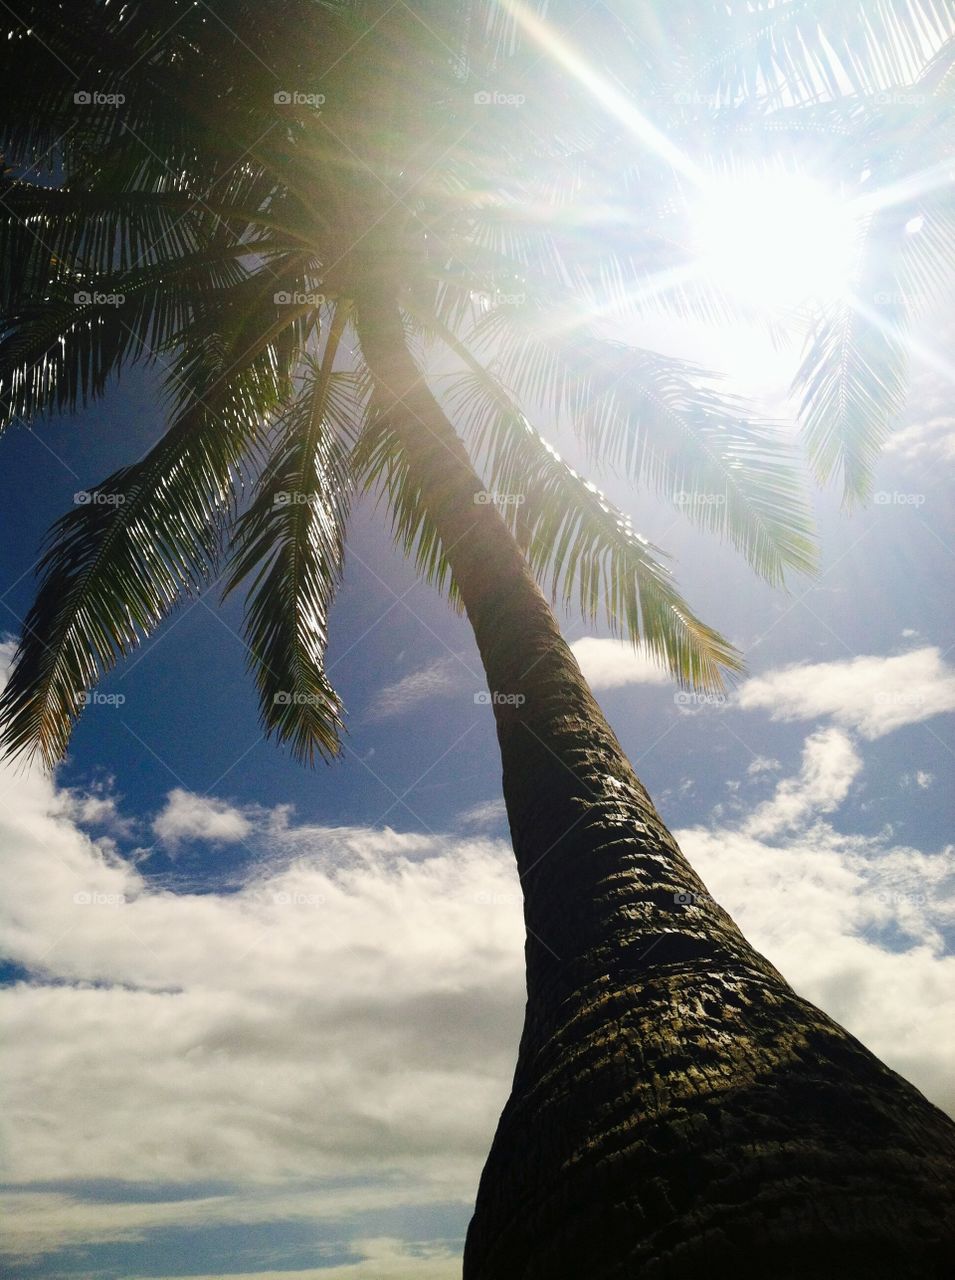 Hawaii life . Chilling under a palm tree on Kauai